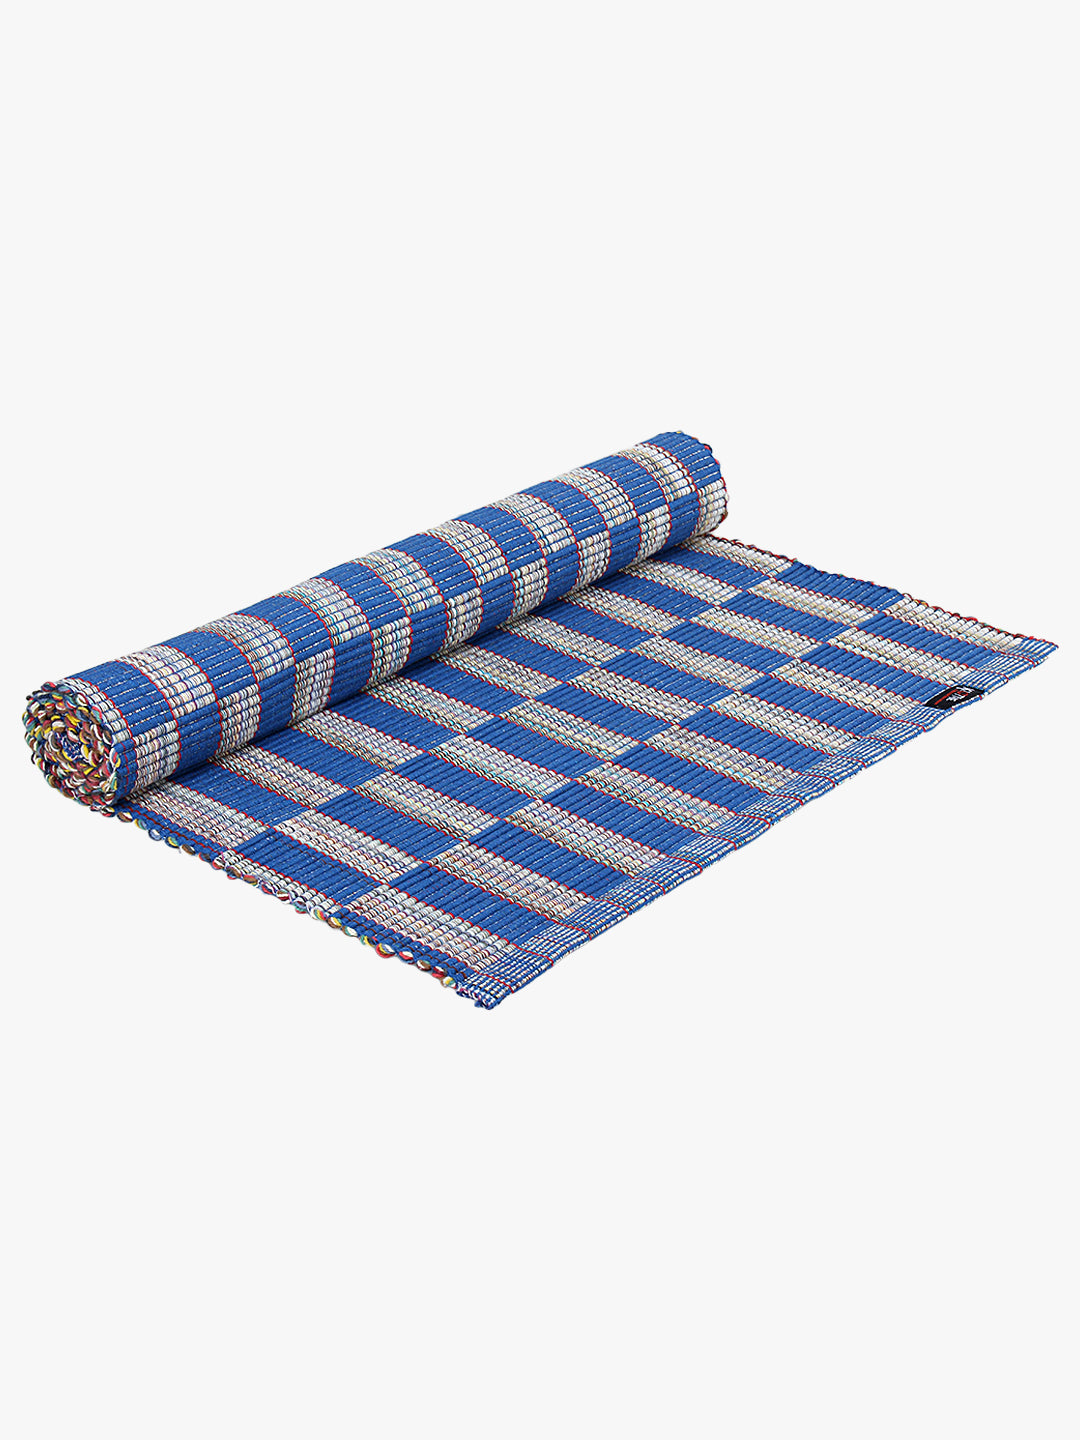 Blue Cotton Floor Mats or Dhurries